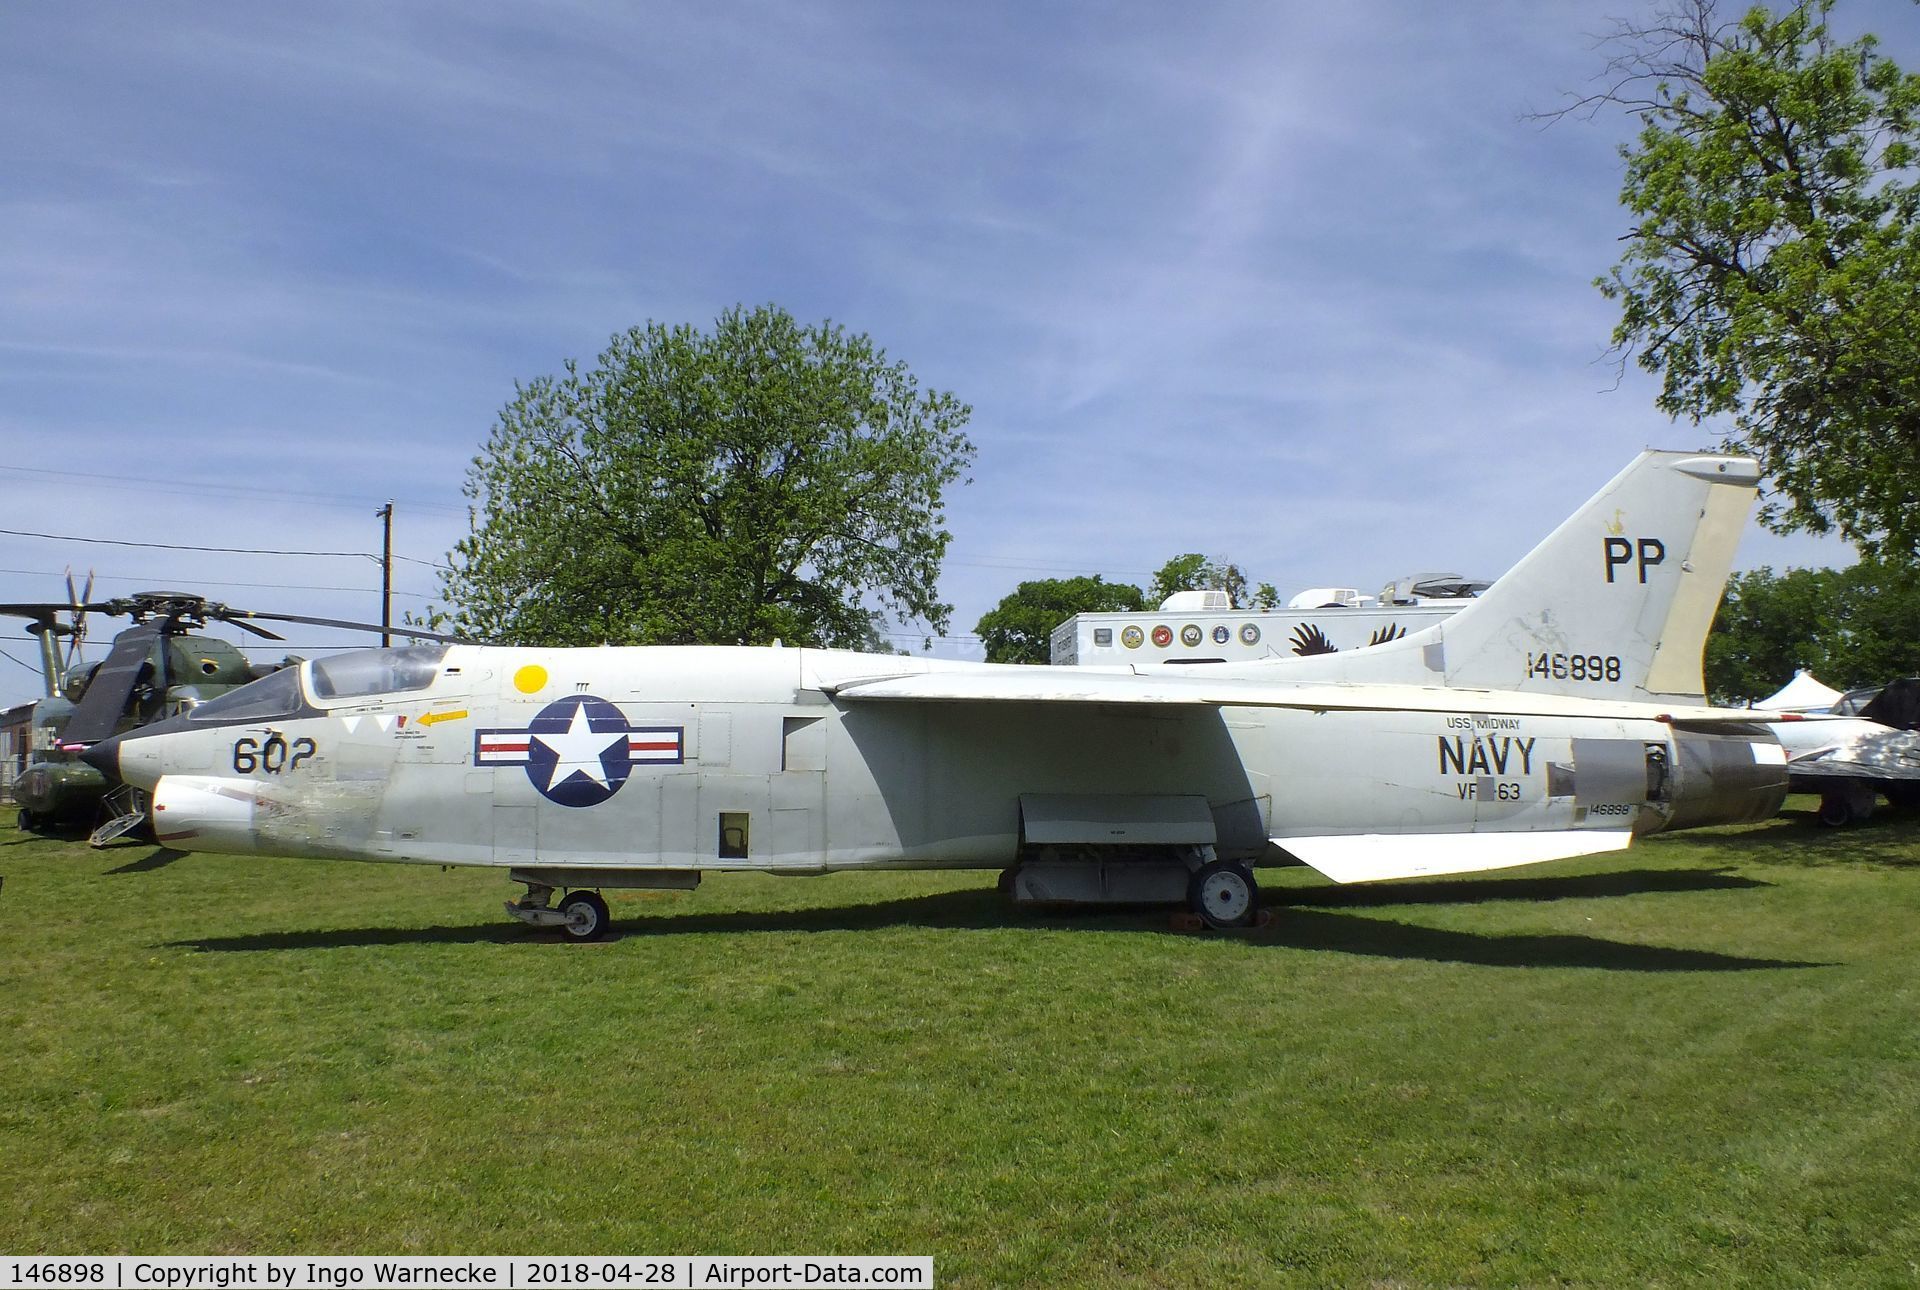 146898, Vought RF-8G Crusader C/N 728, Vought RF-8G Crusader (tailplanes still missing), undergoing restauration at the Fort Worth Aviation Museum, Fort Worth TX